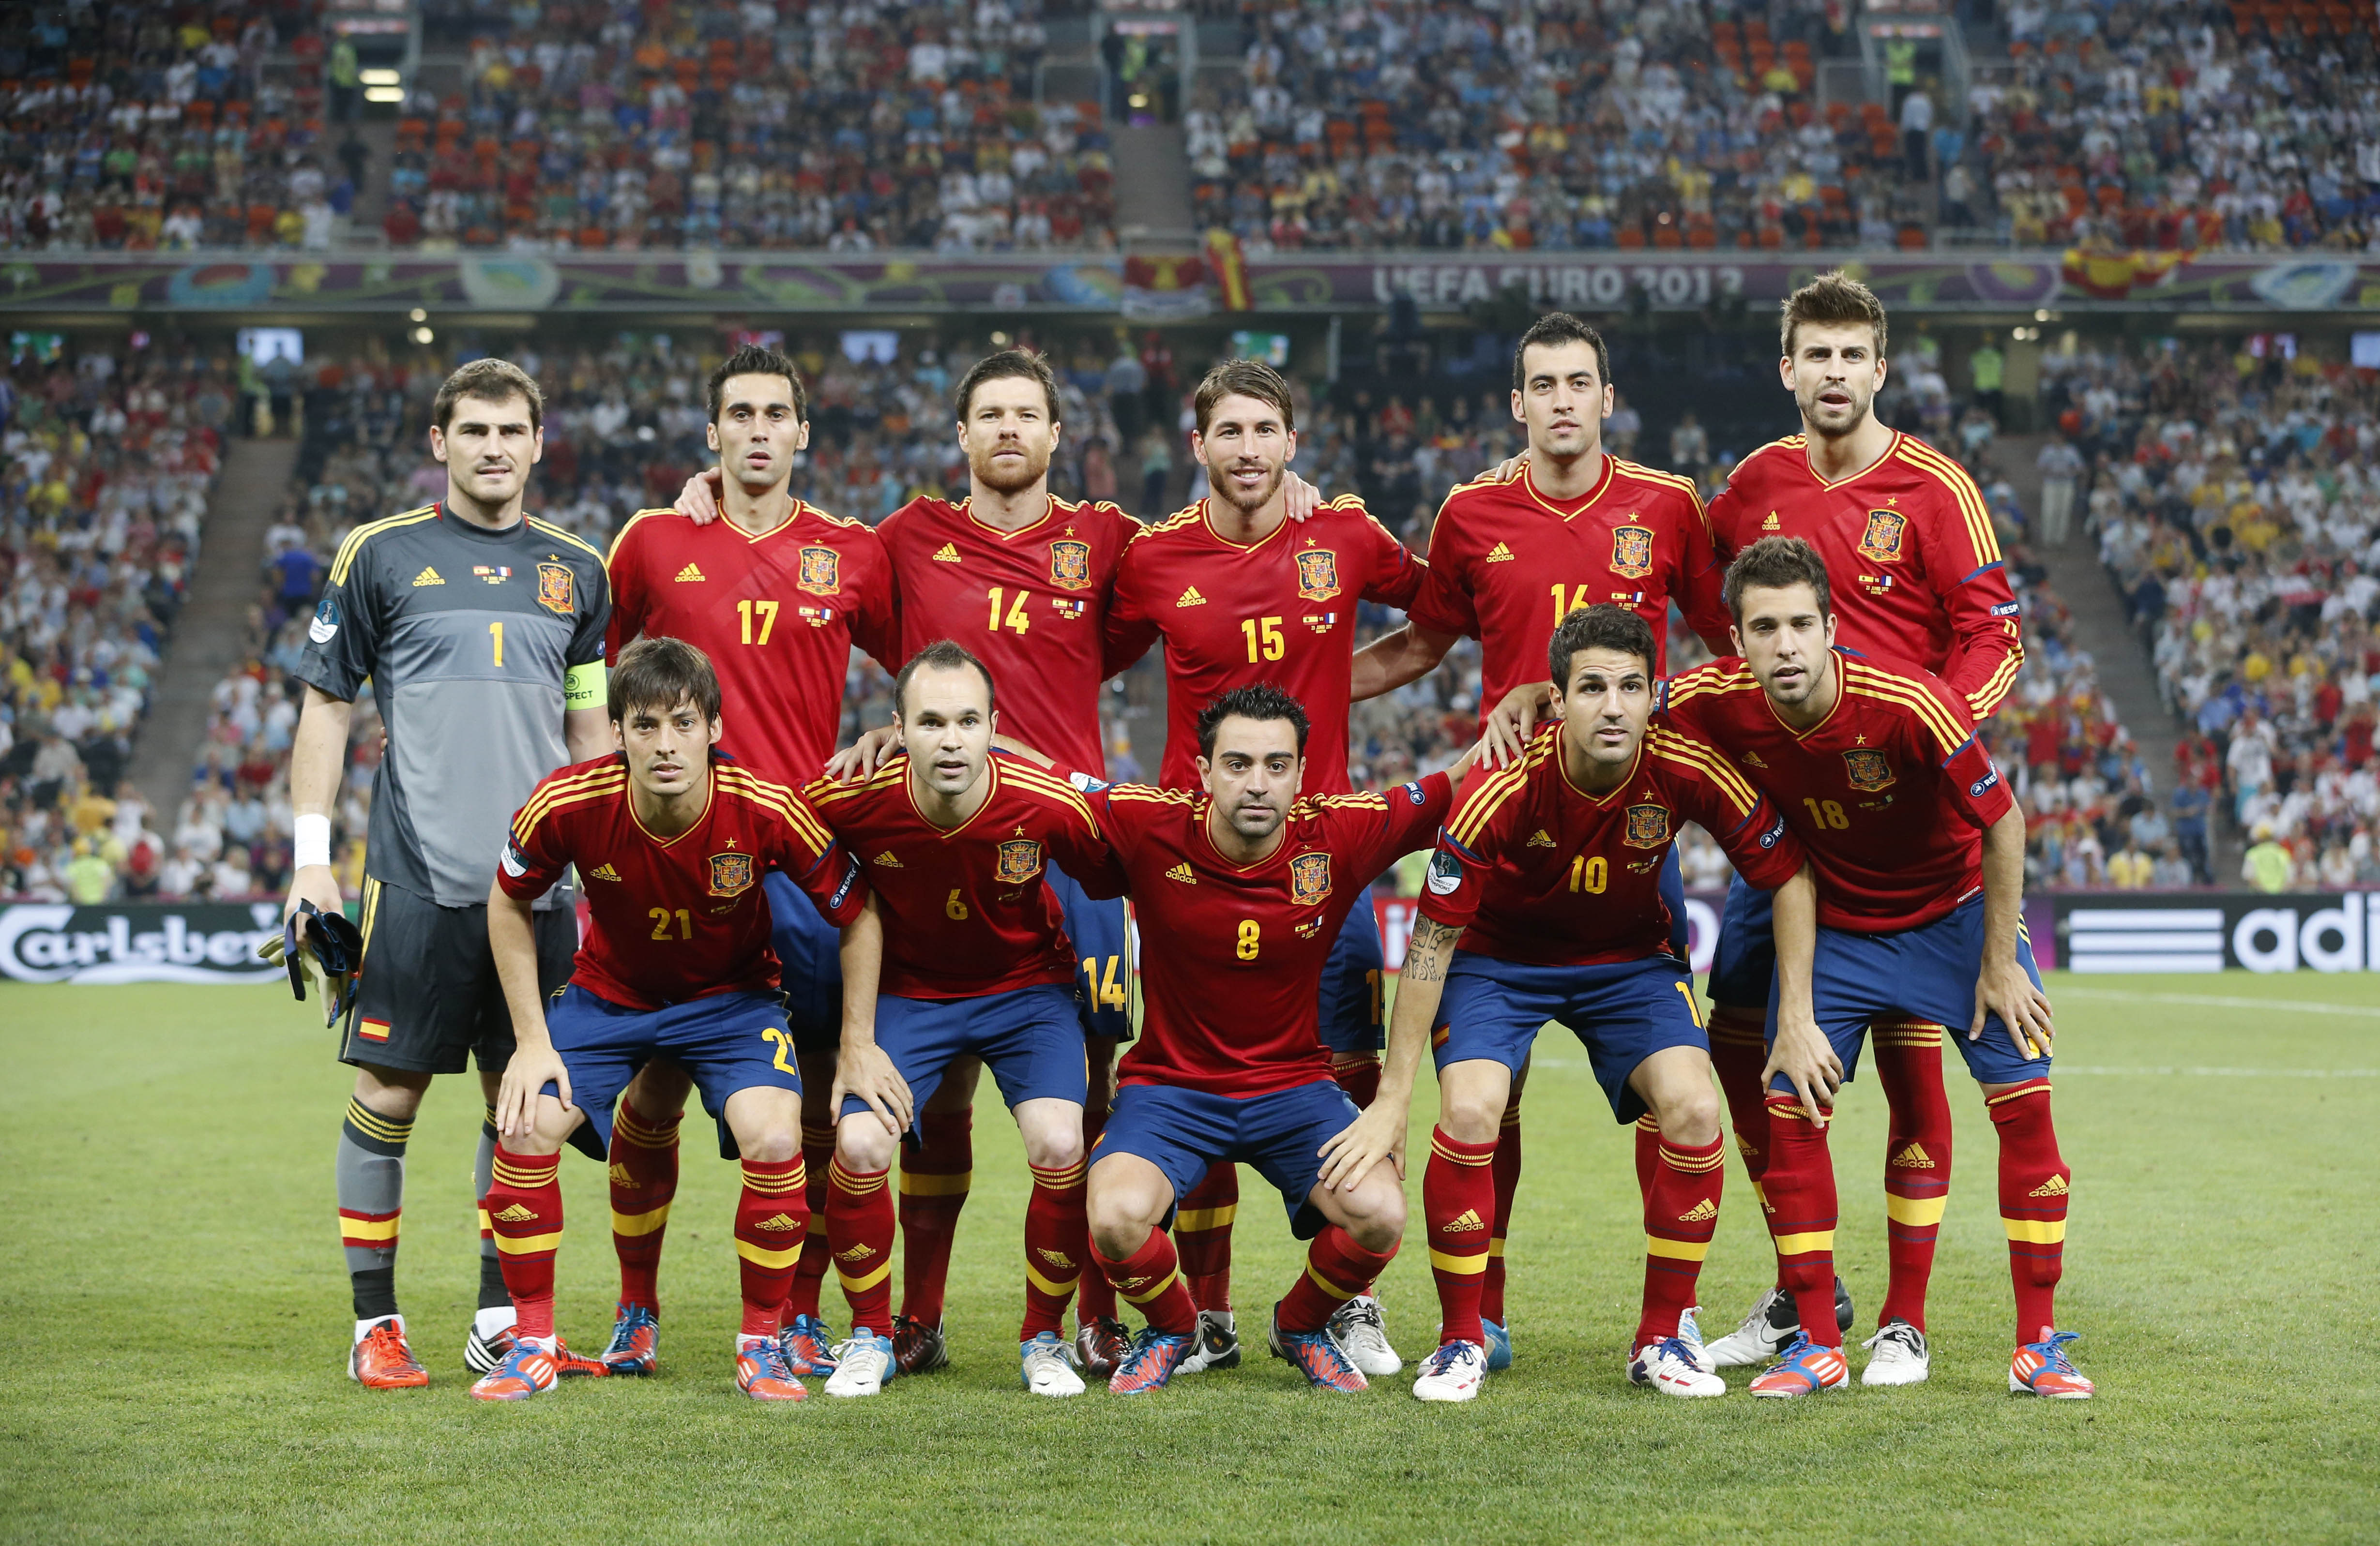 Fotbolls-EM, Italien, Tyskland, Mario Balotelli, Spanien, Manchester City